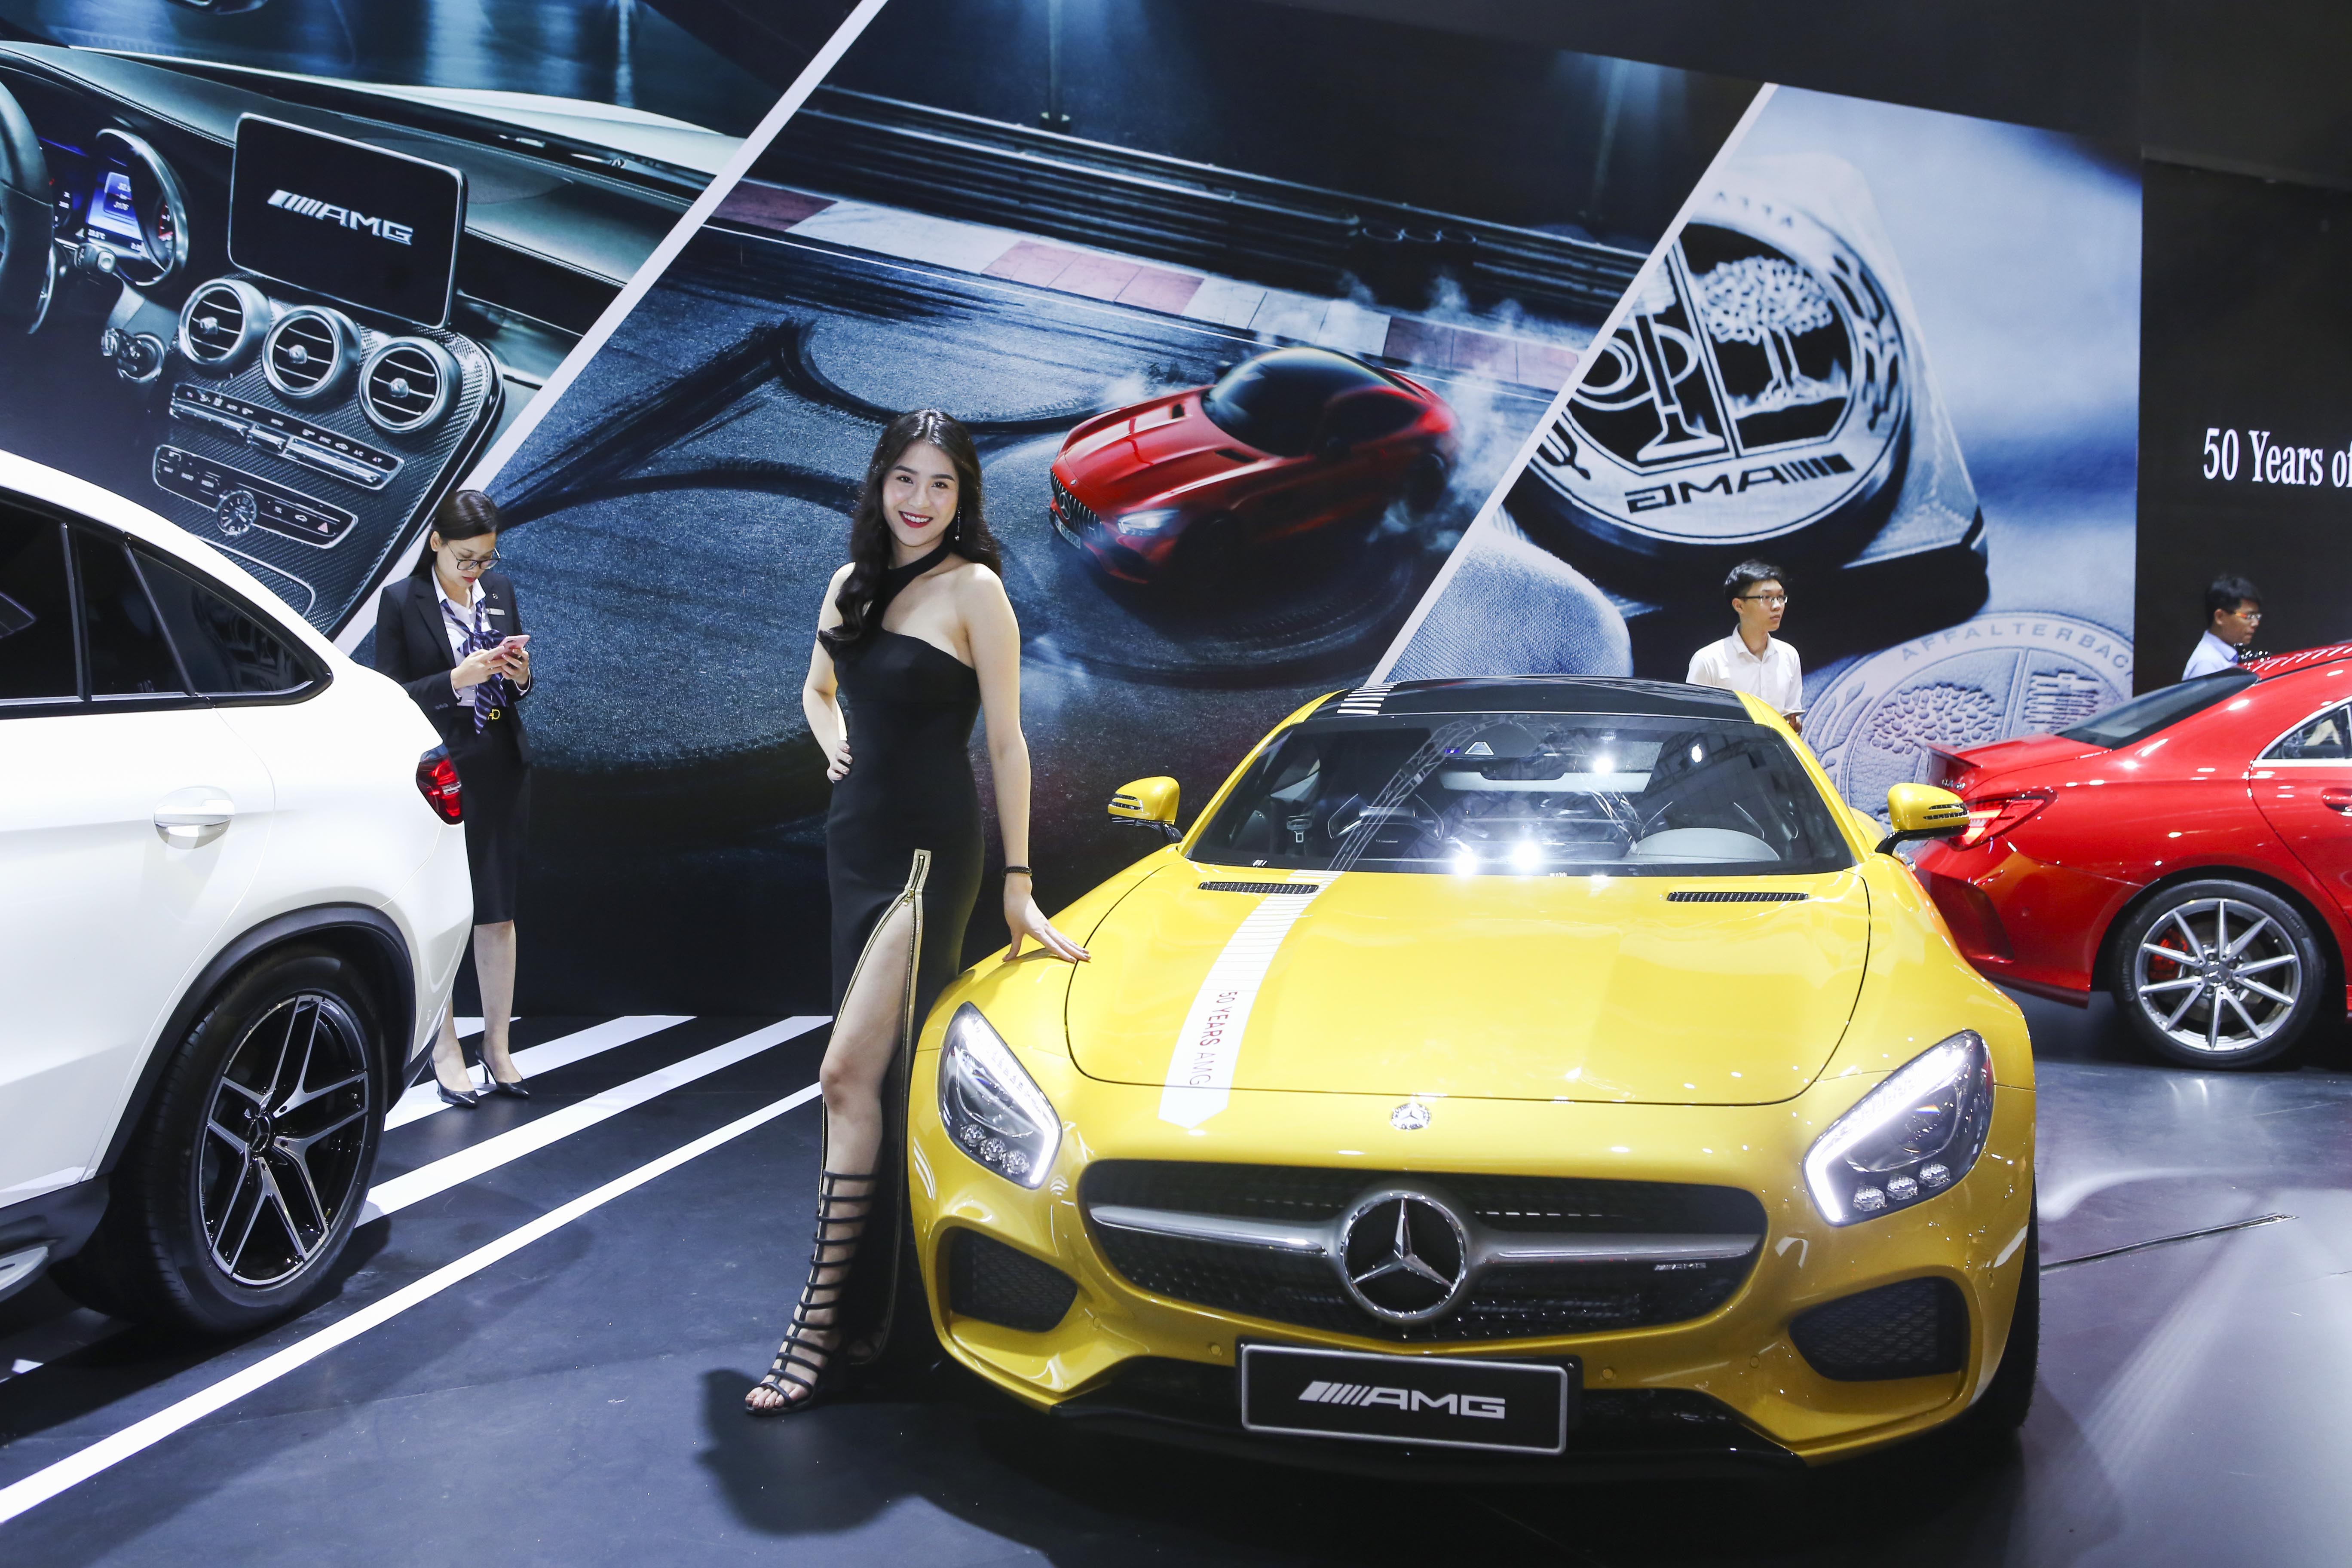 Mercedes-Benz Fascination 2017 invites visitors on a journey